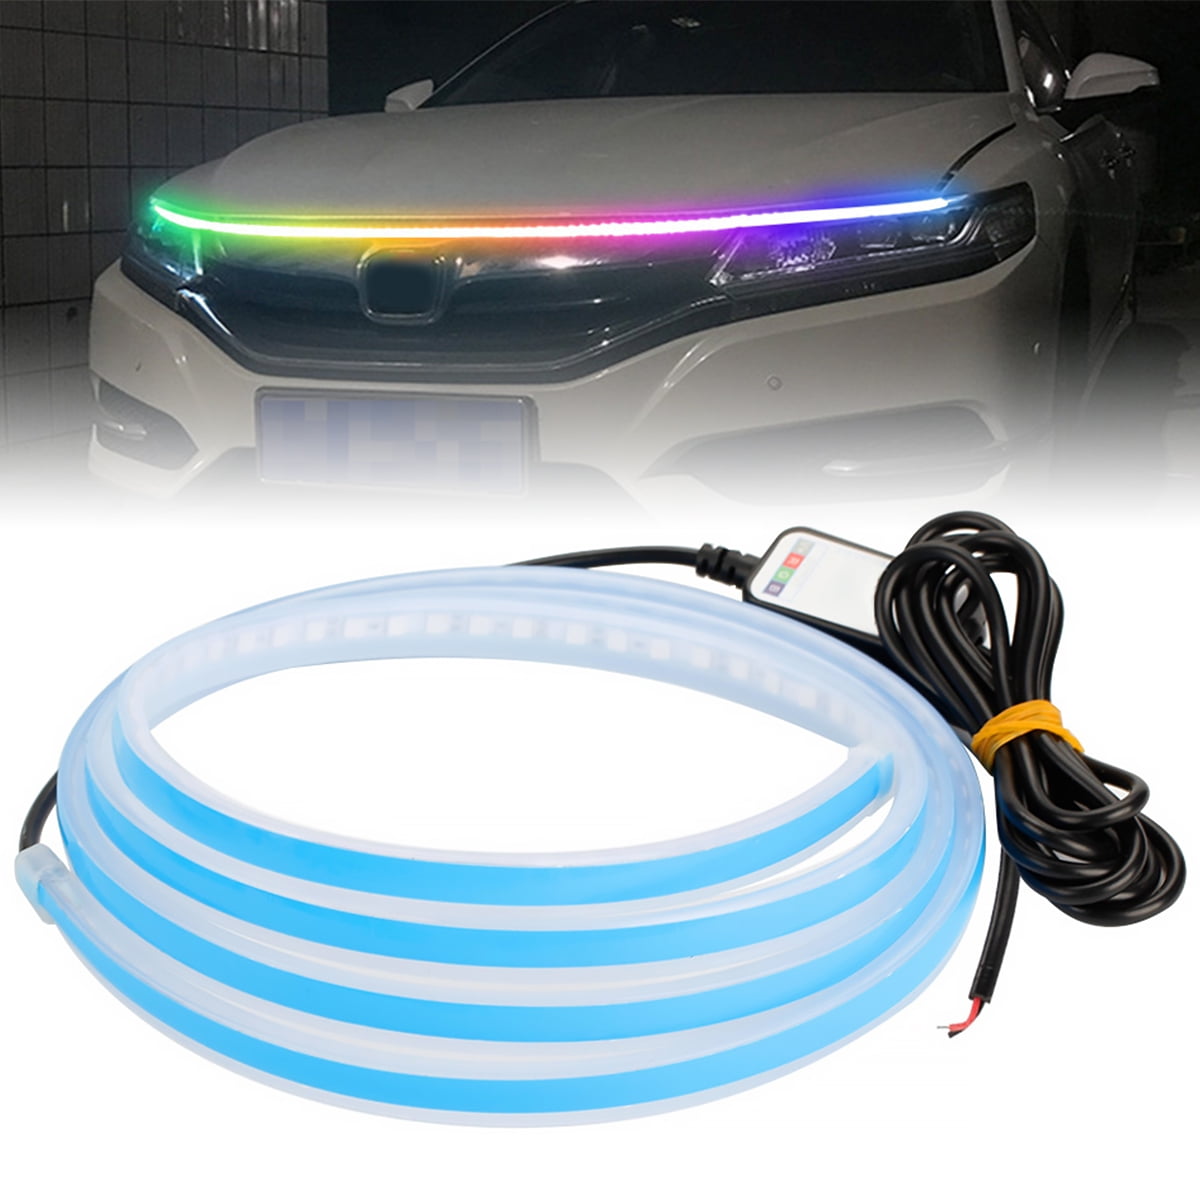  Vaguelly Car Bonnet Light Strip car Hood LED Strip